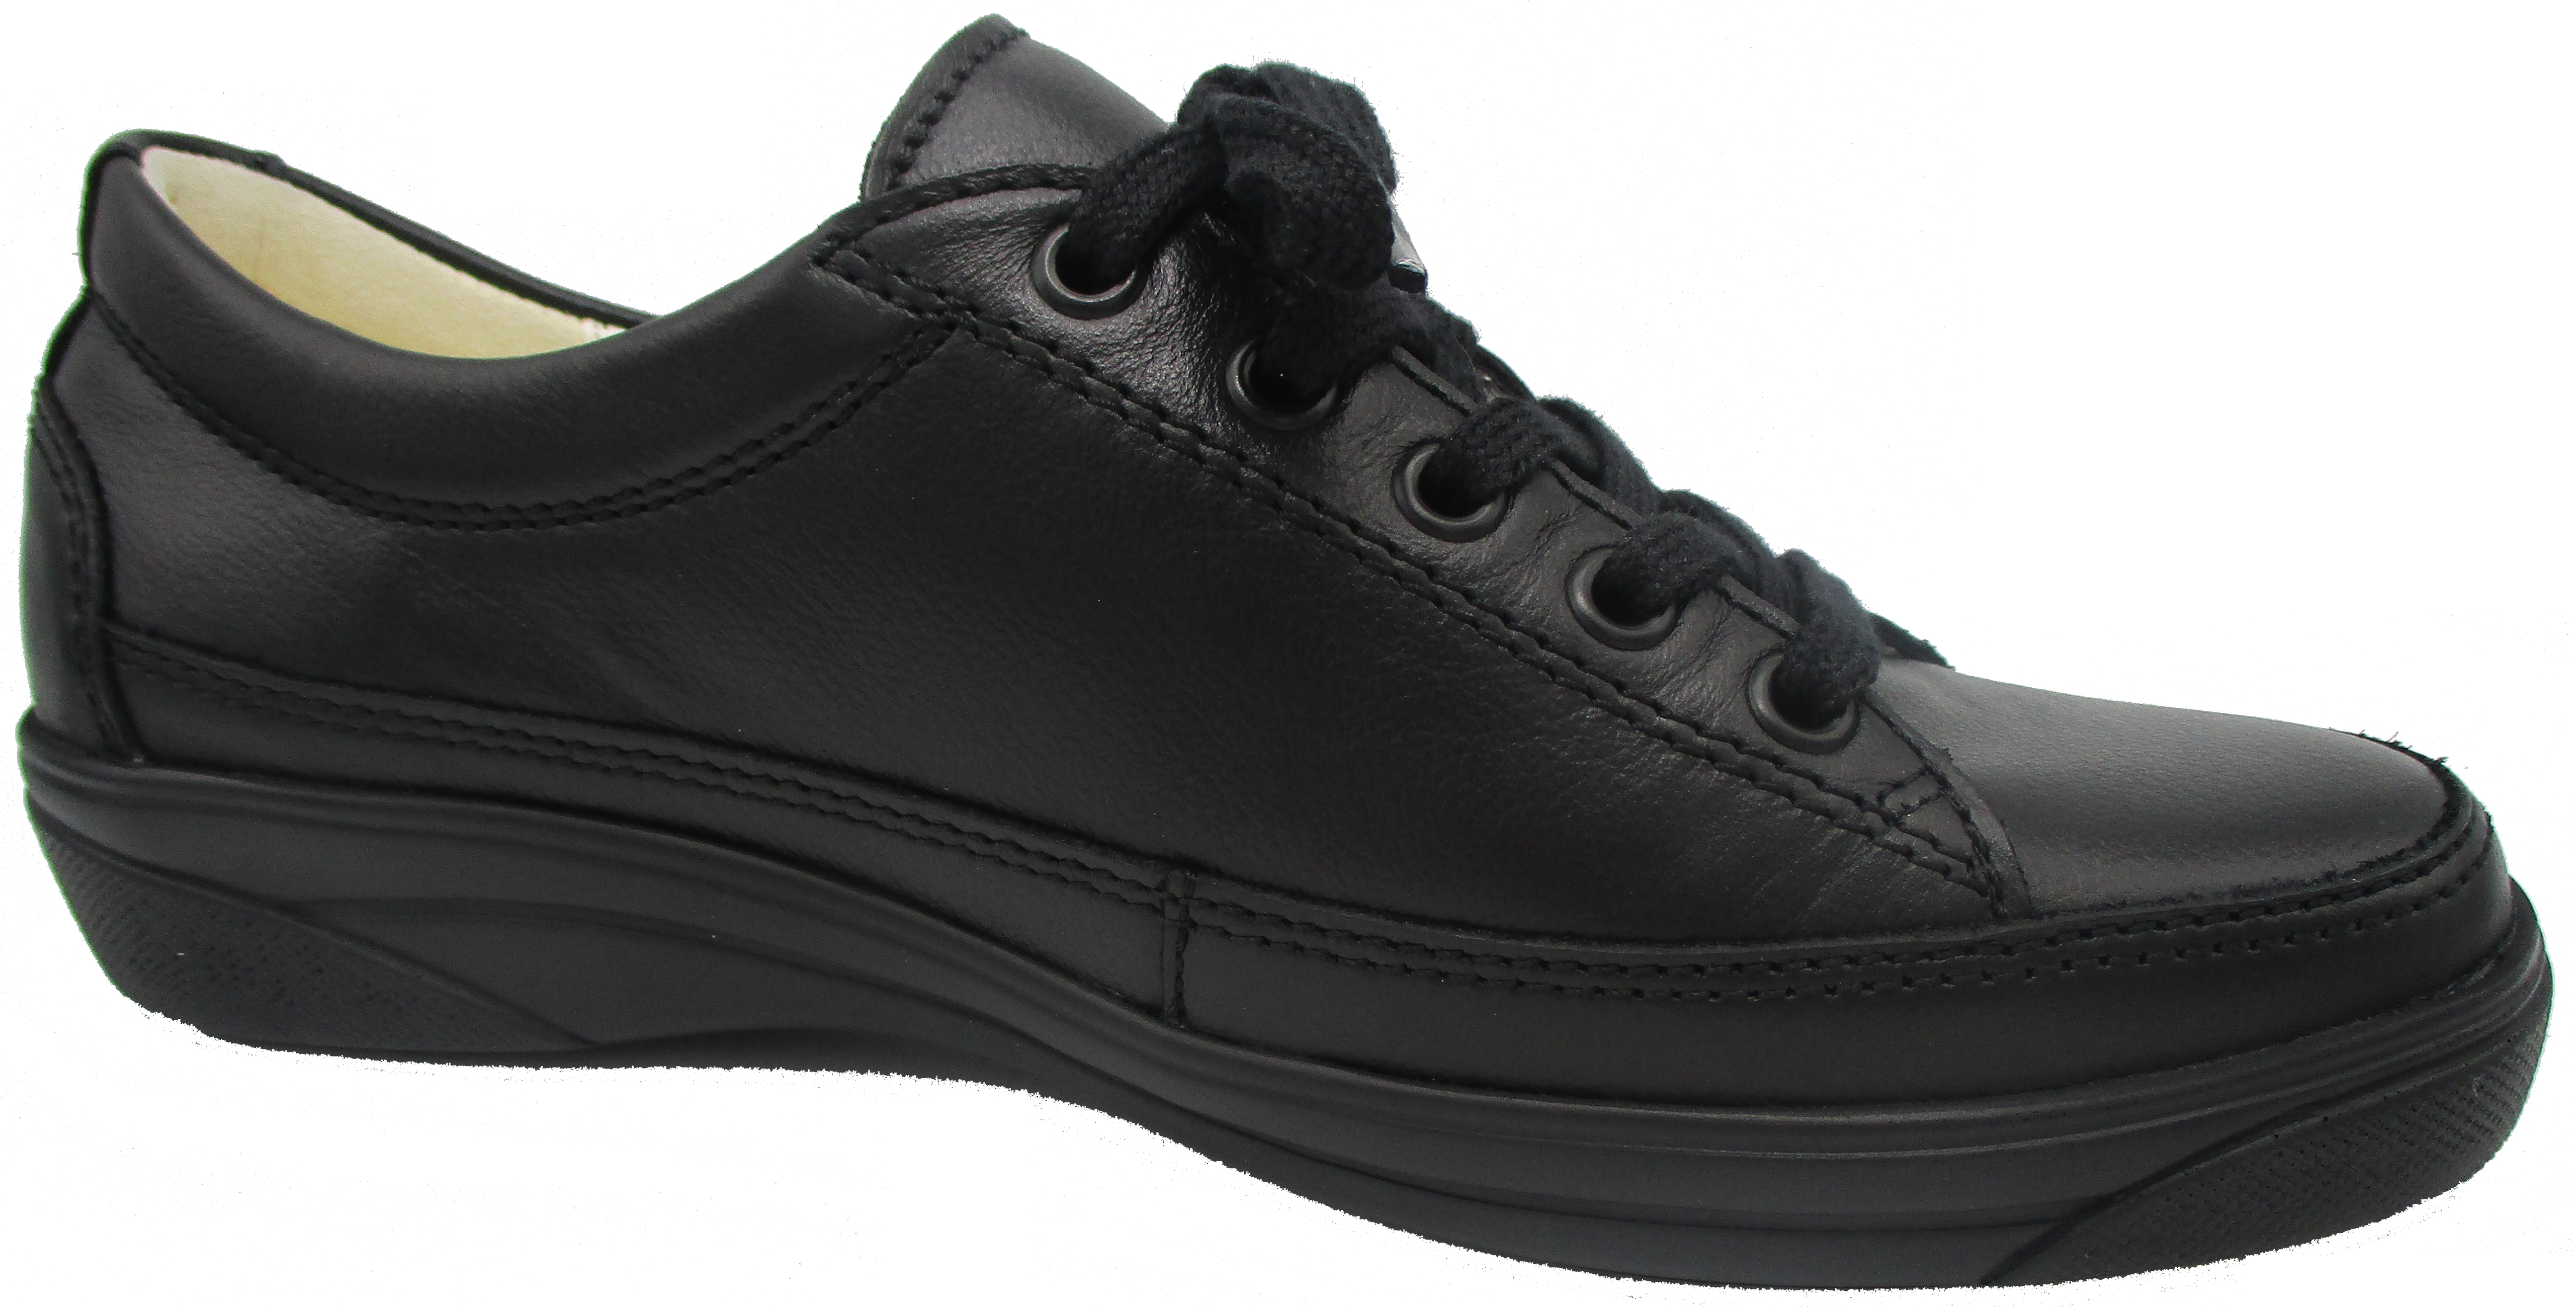 Ascona - Black smooth leather